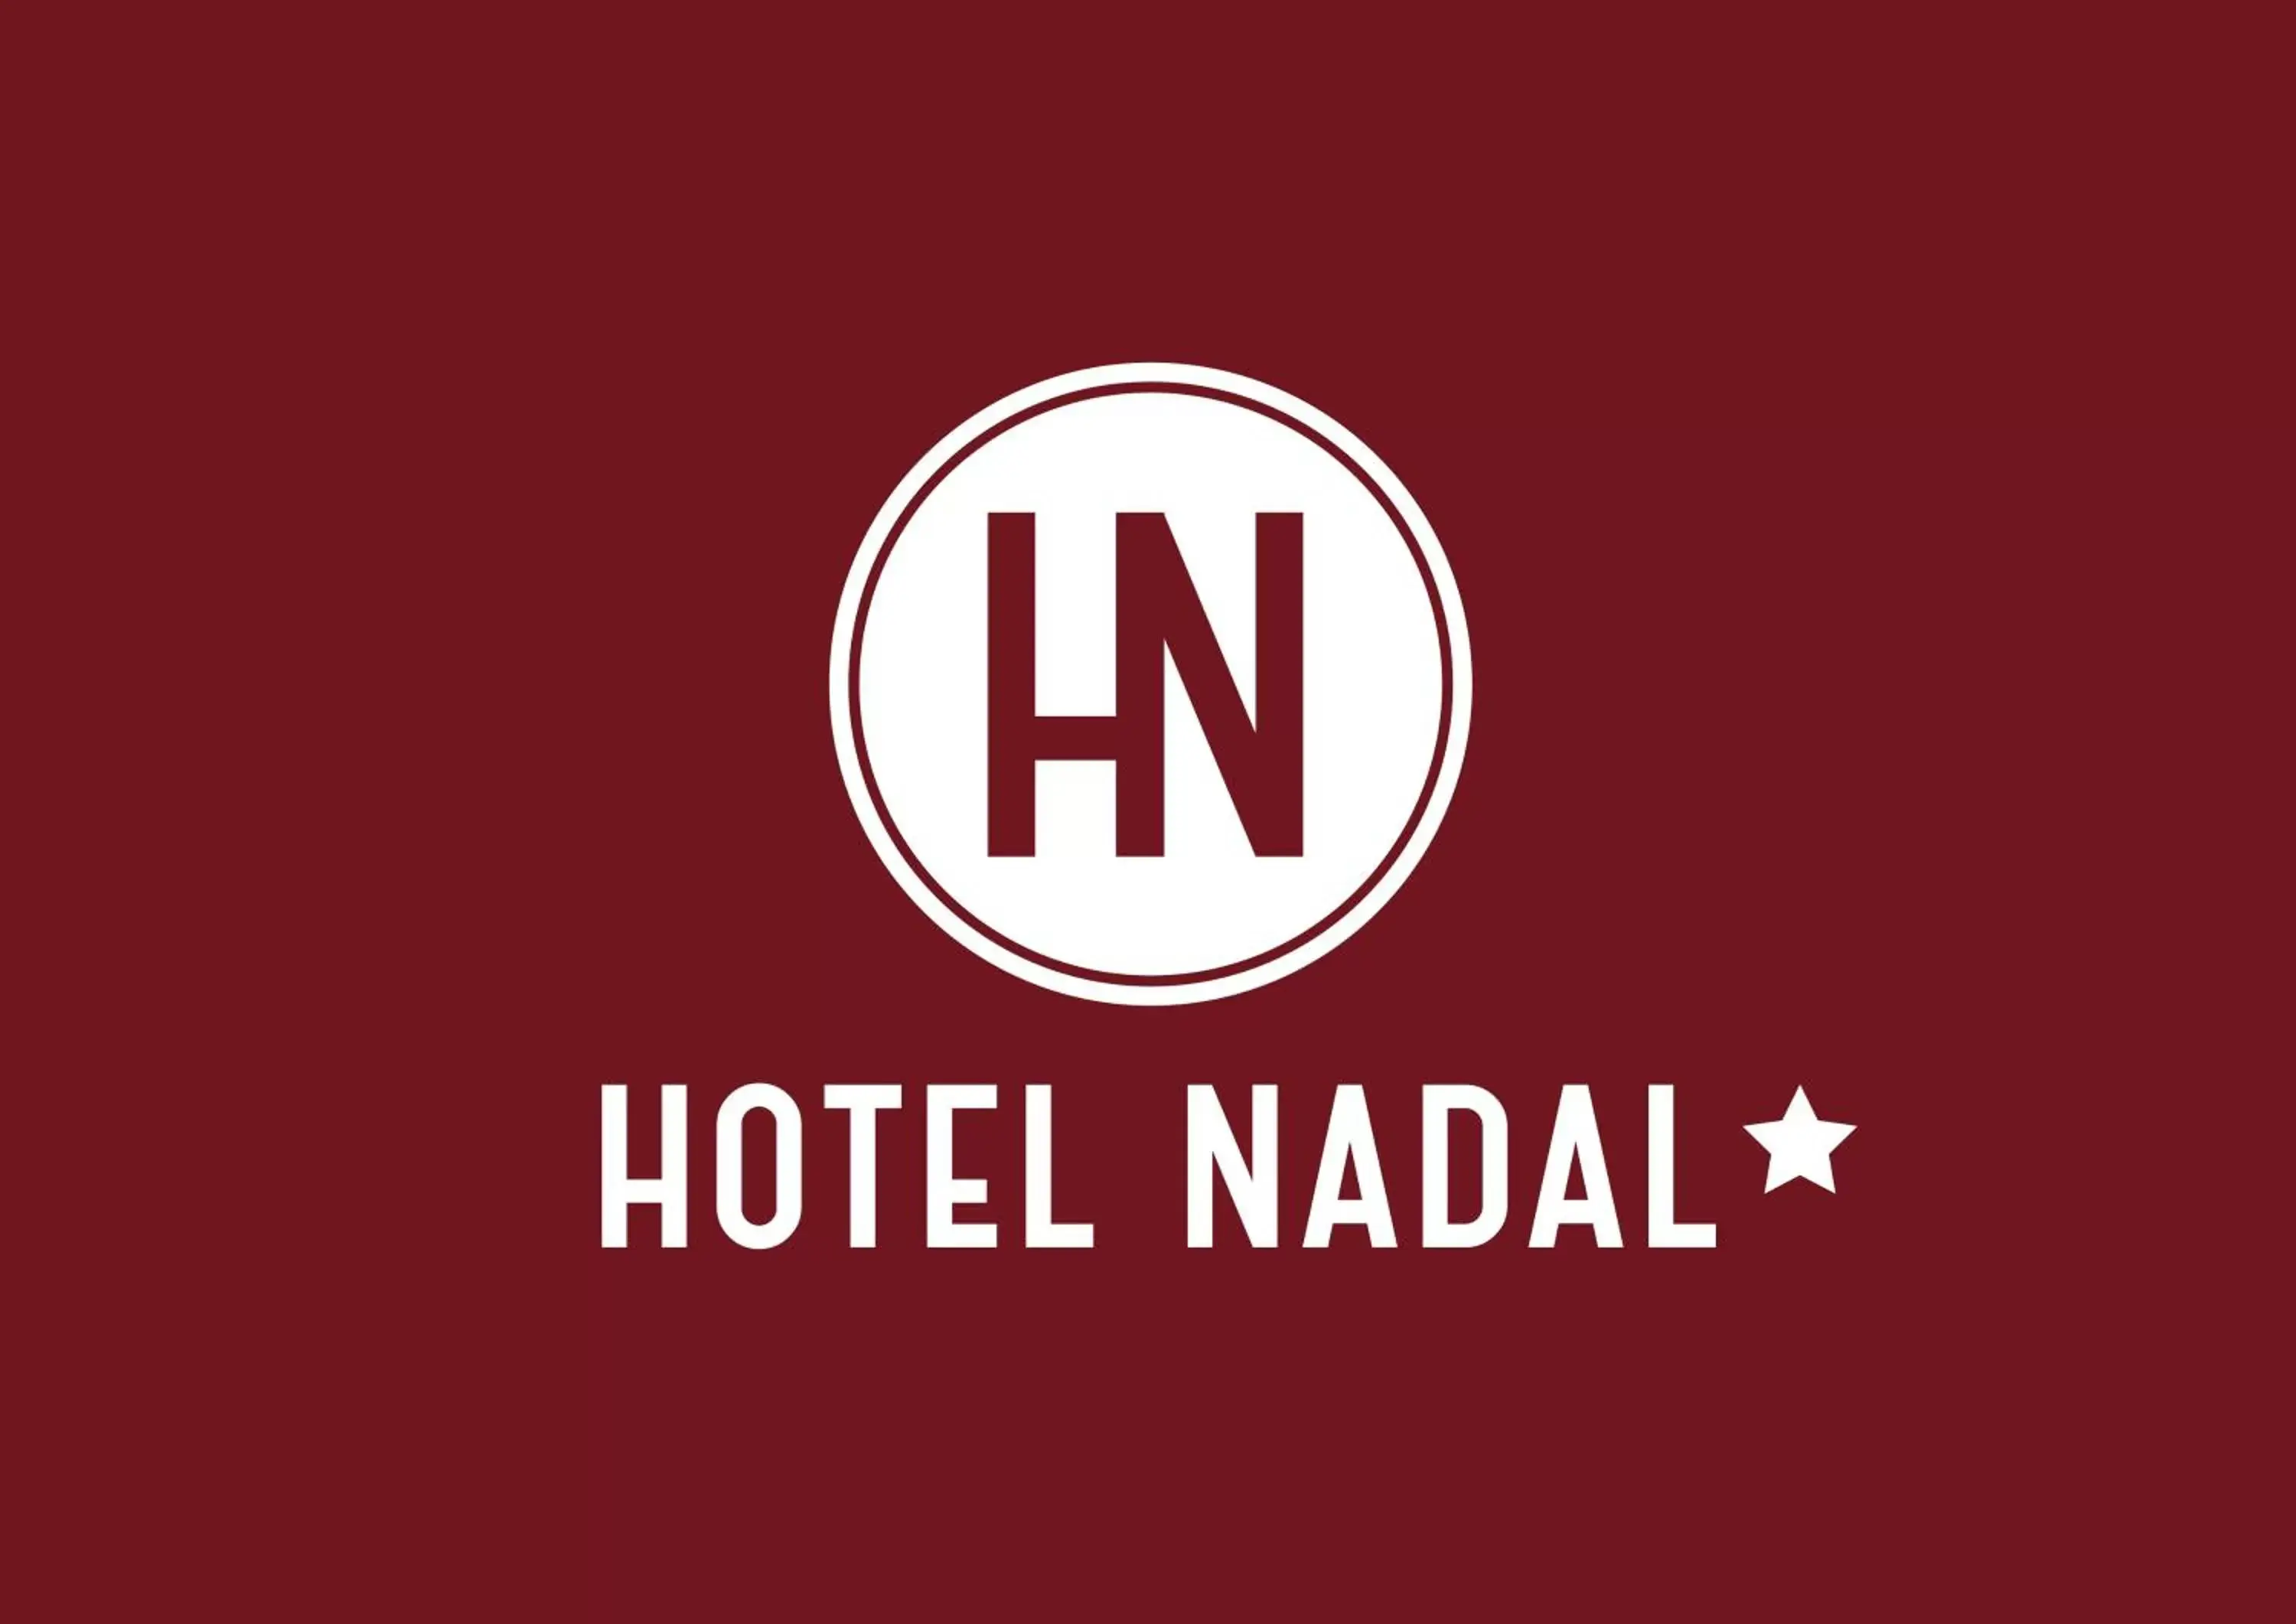 Property logo or sign in Hotel Nadal